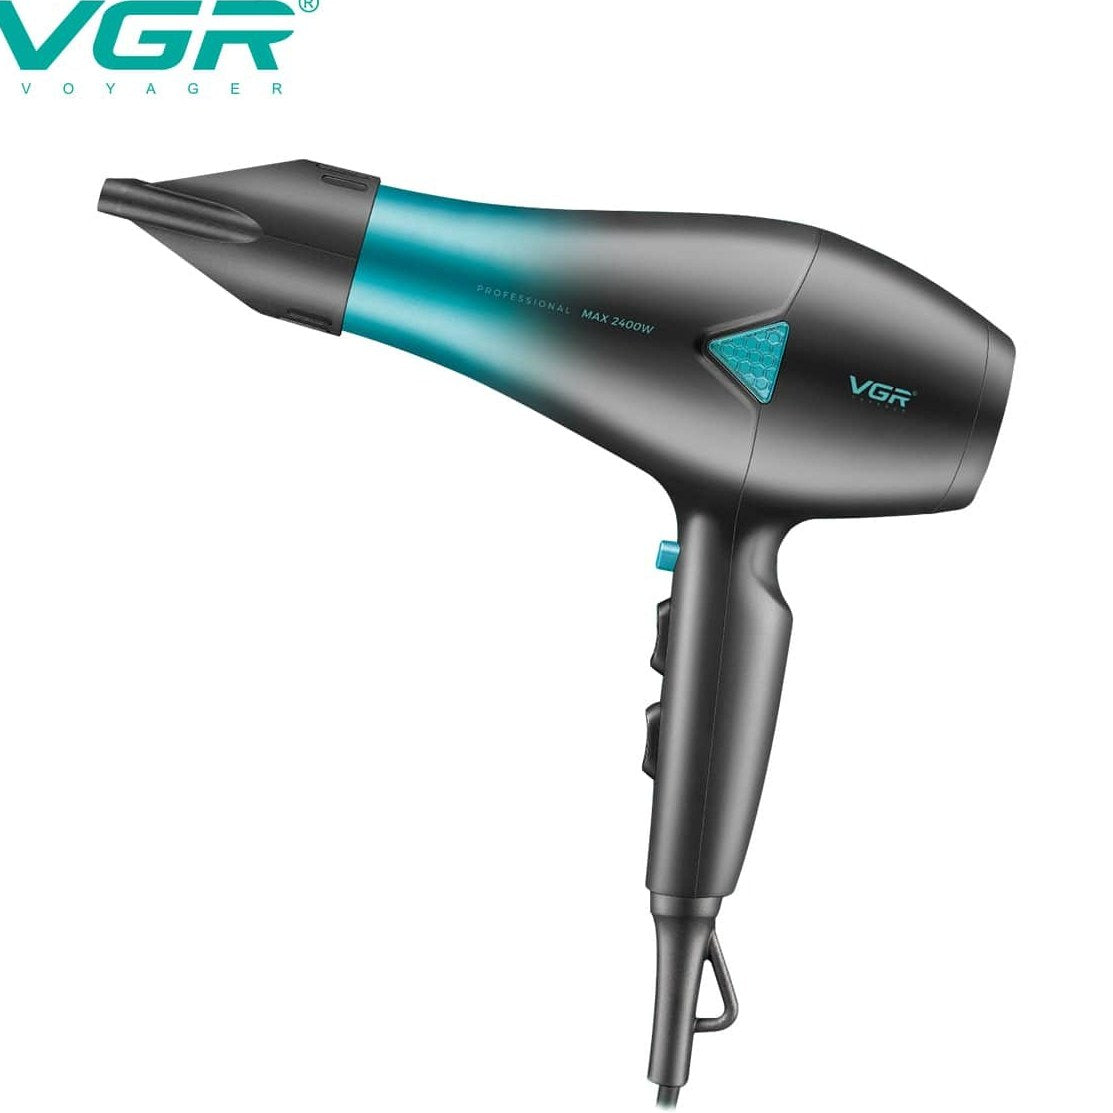 V-455 / VGR Hair dryer 2400watt AC Motor with Overheating Protection hair Dryer / 2400 watt / BLACK